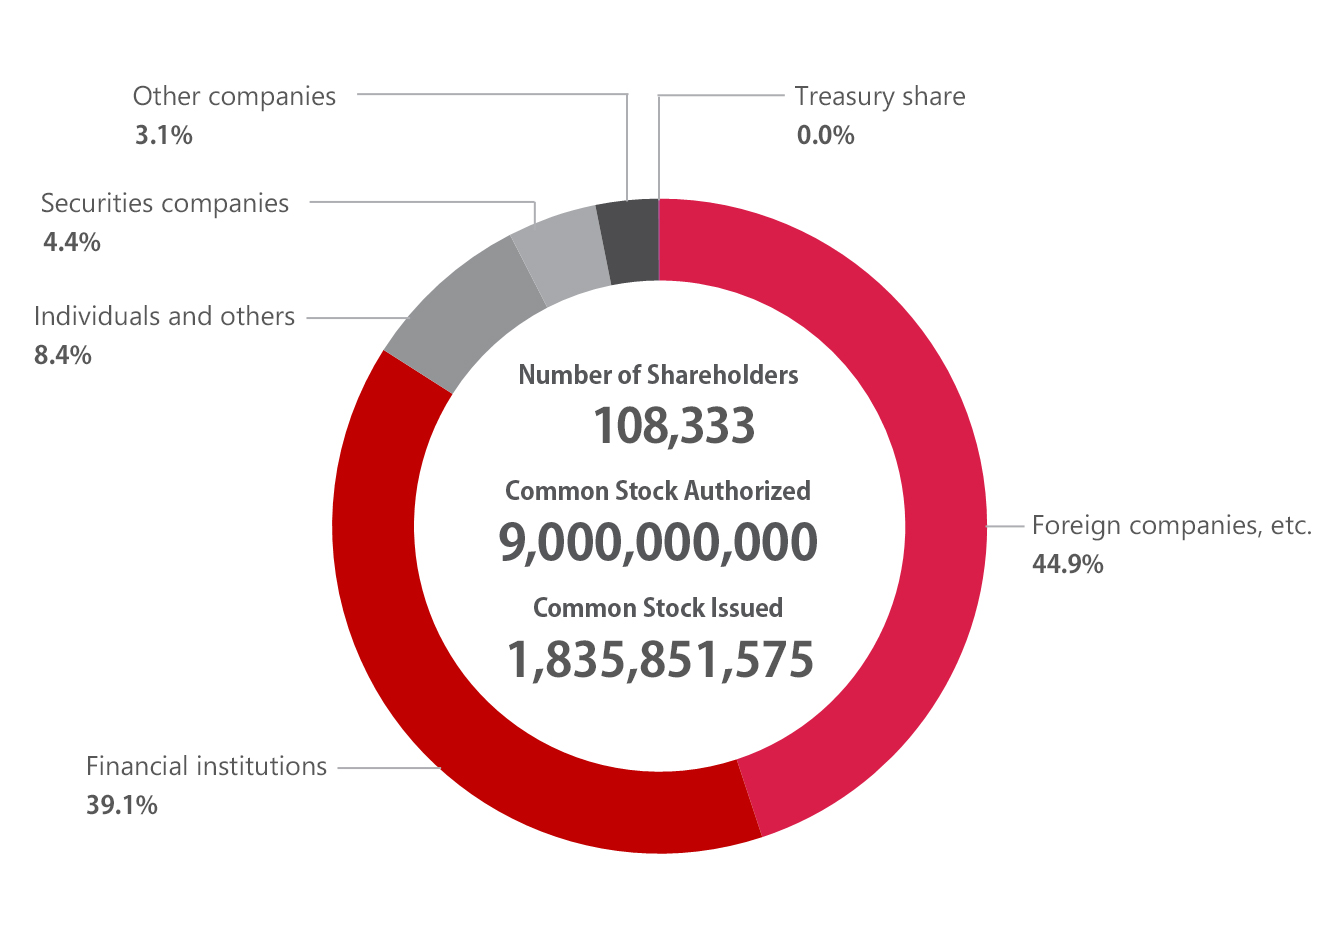 Breakdown of Shareholders by Type